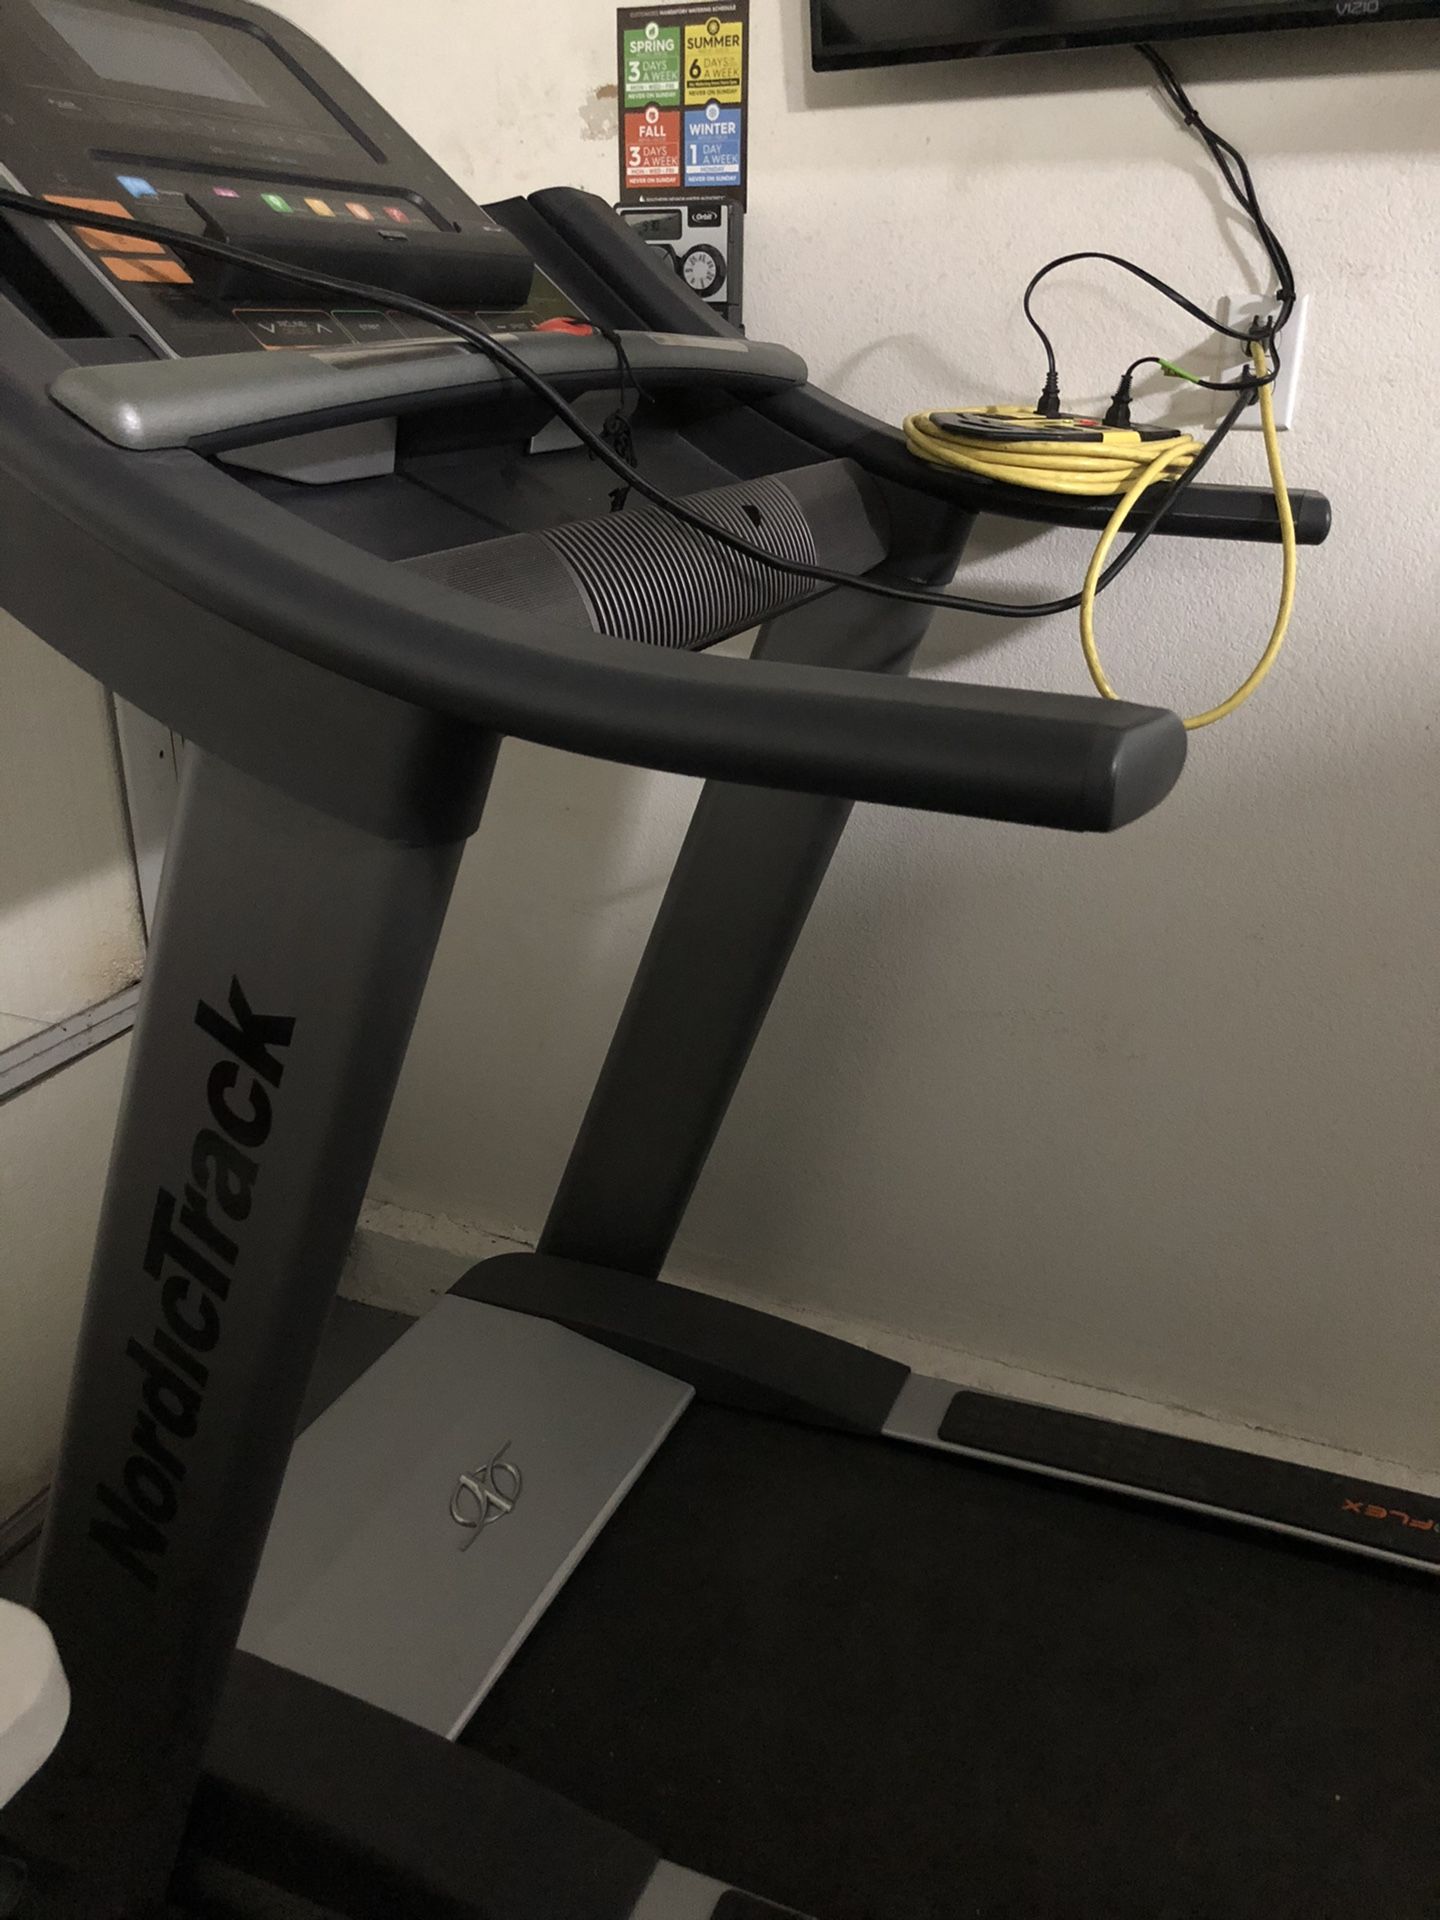 Commercial treadmill NordicTrack 1500